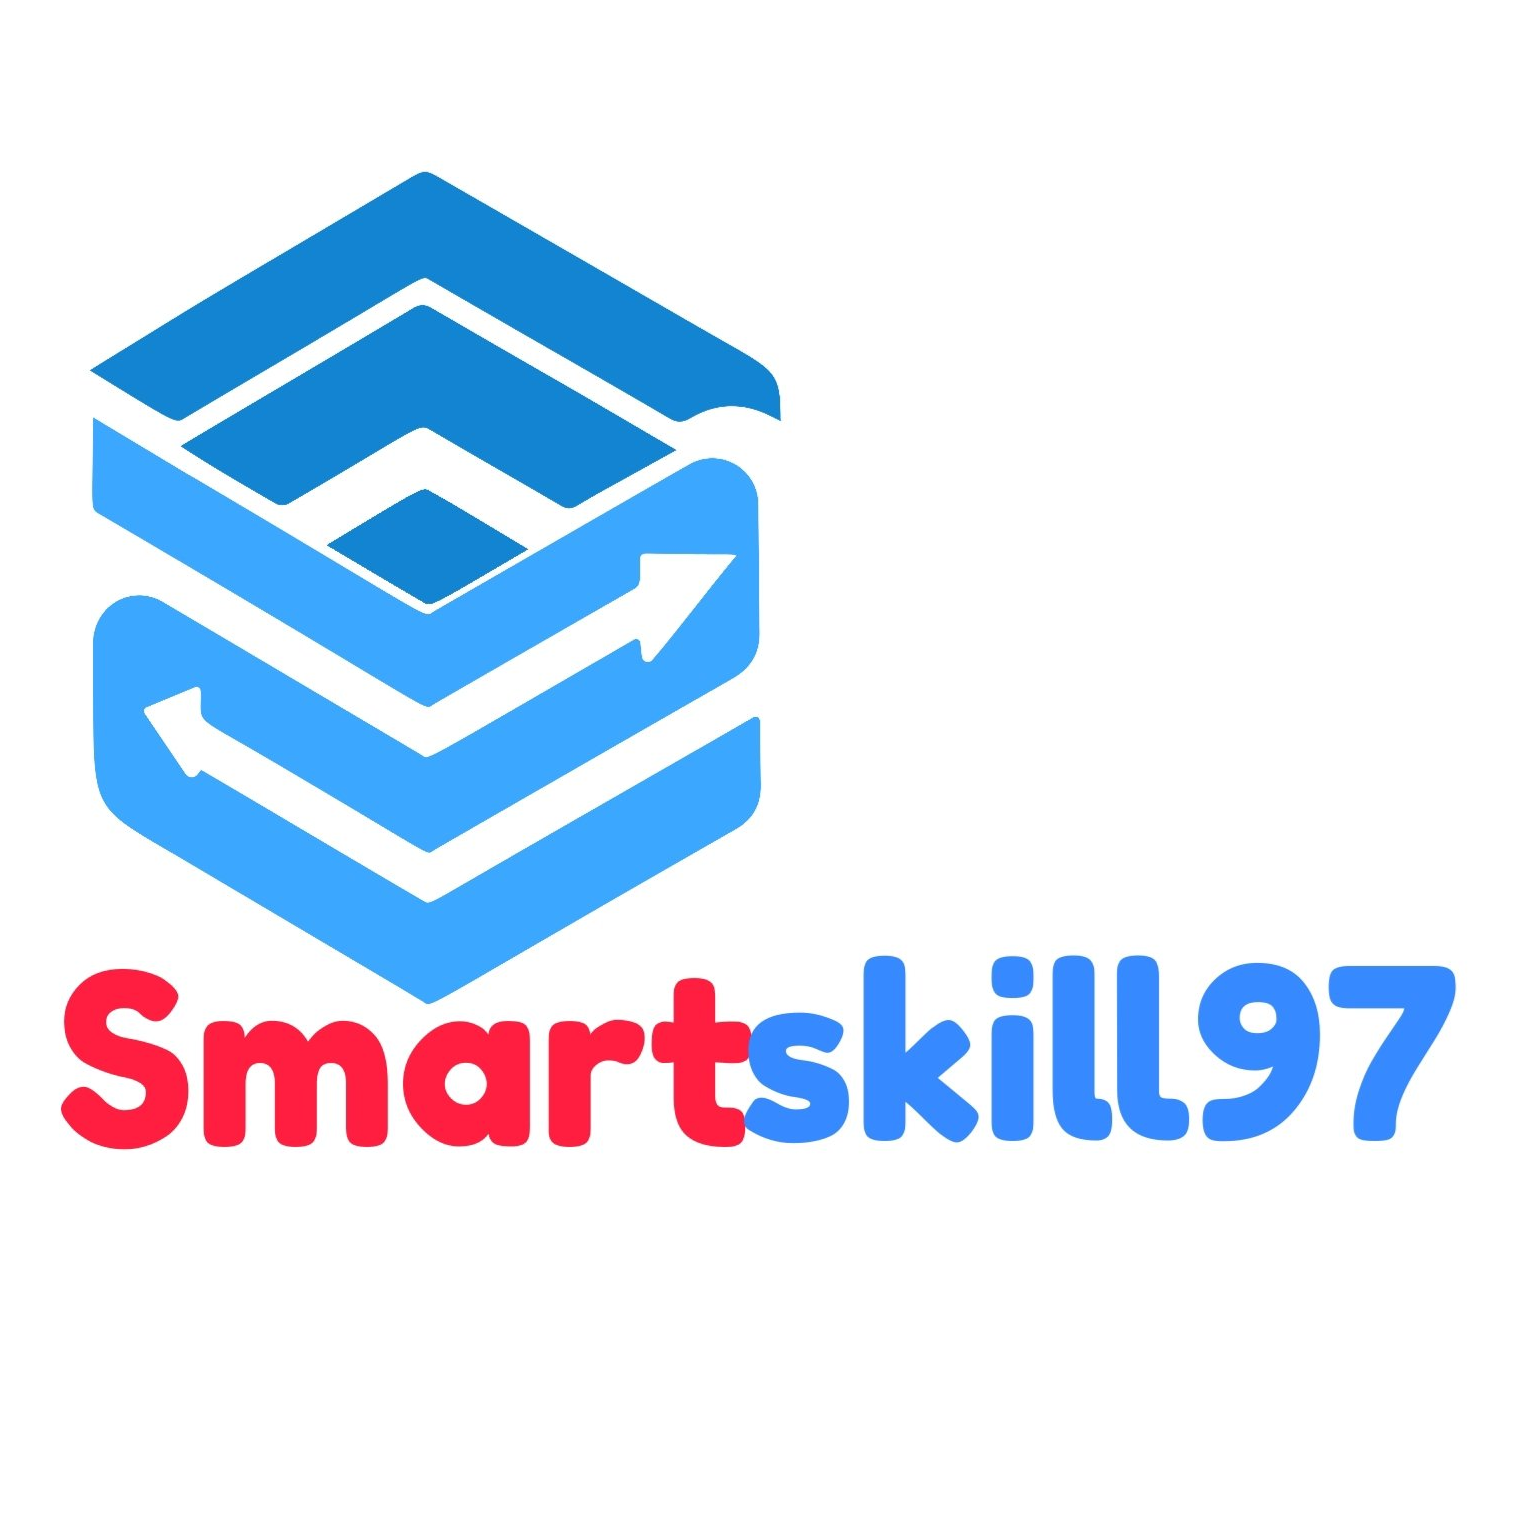 Smart skill97